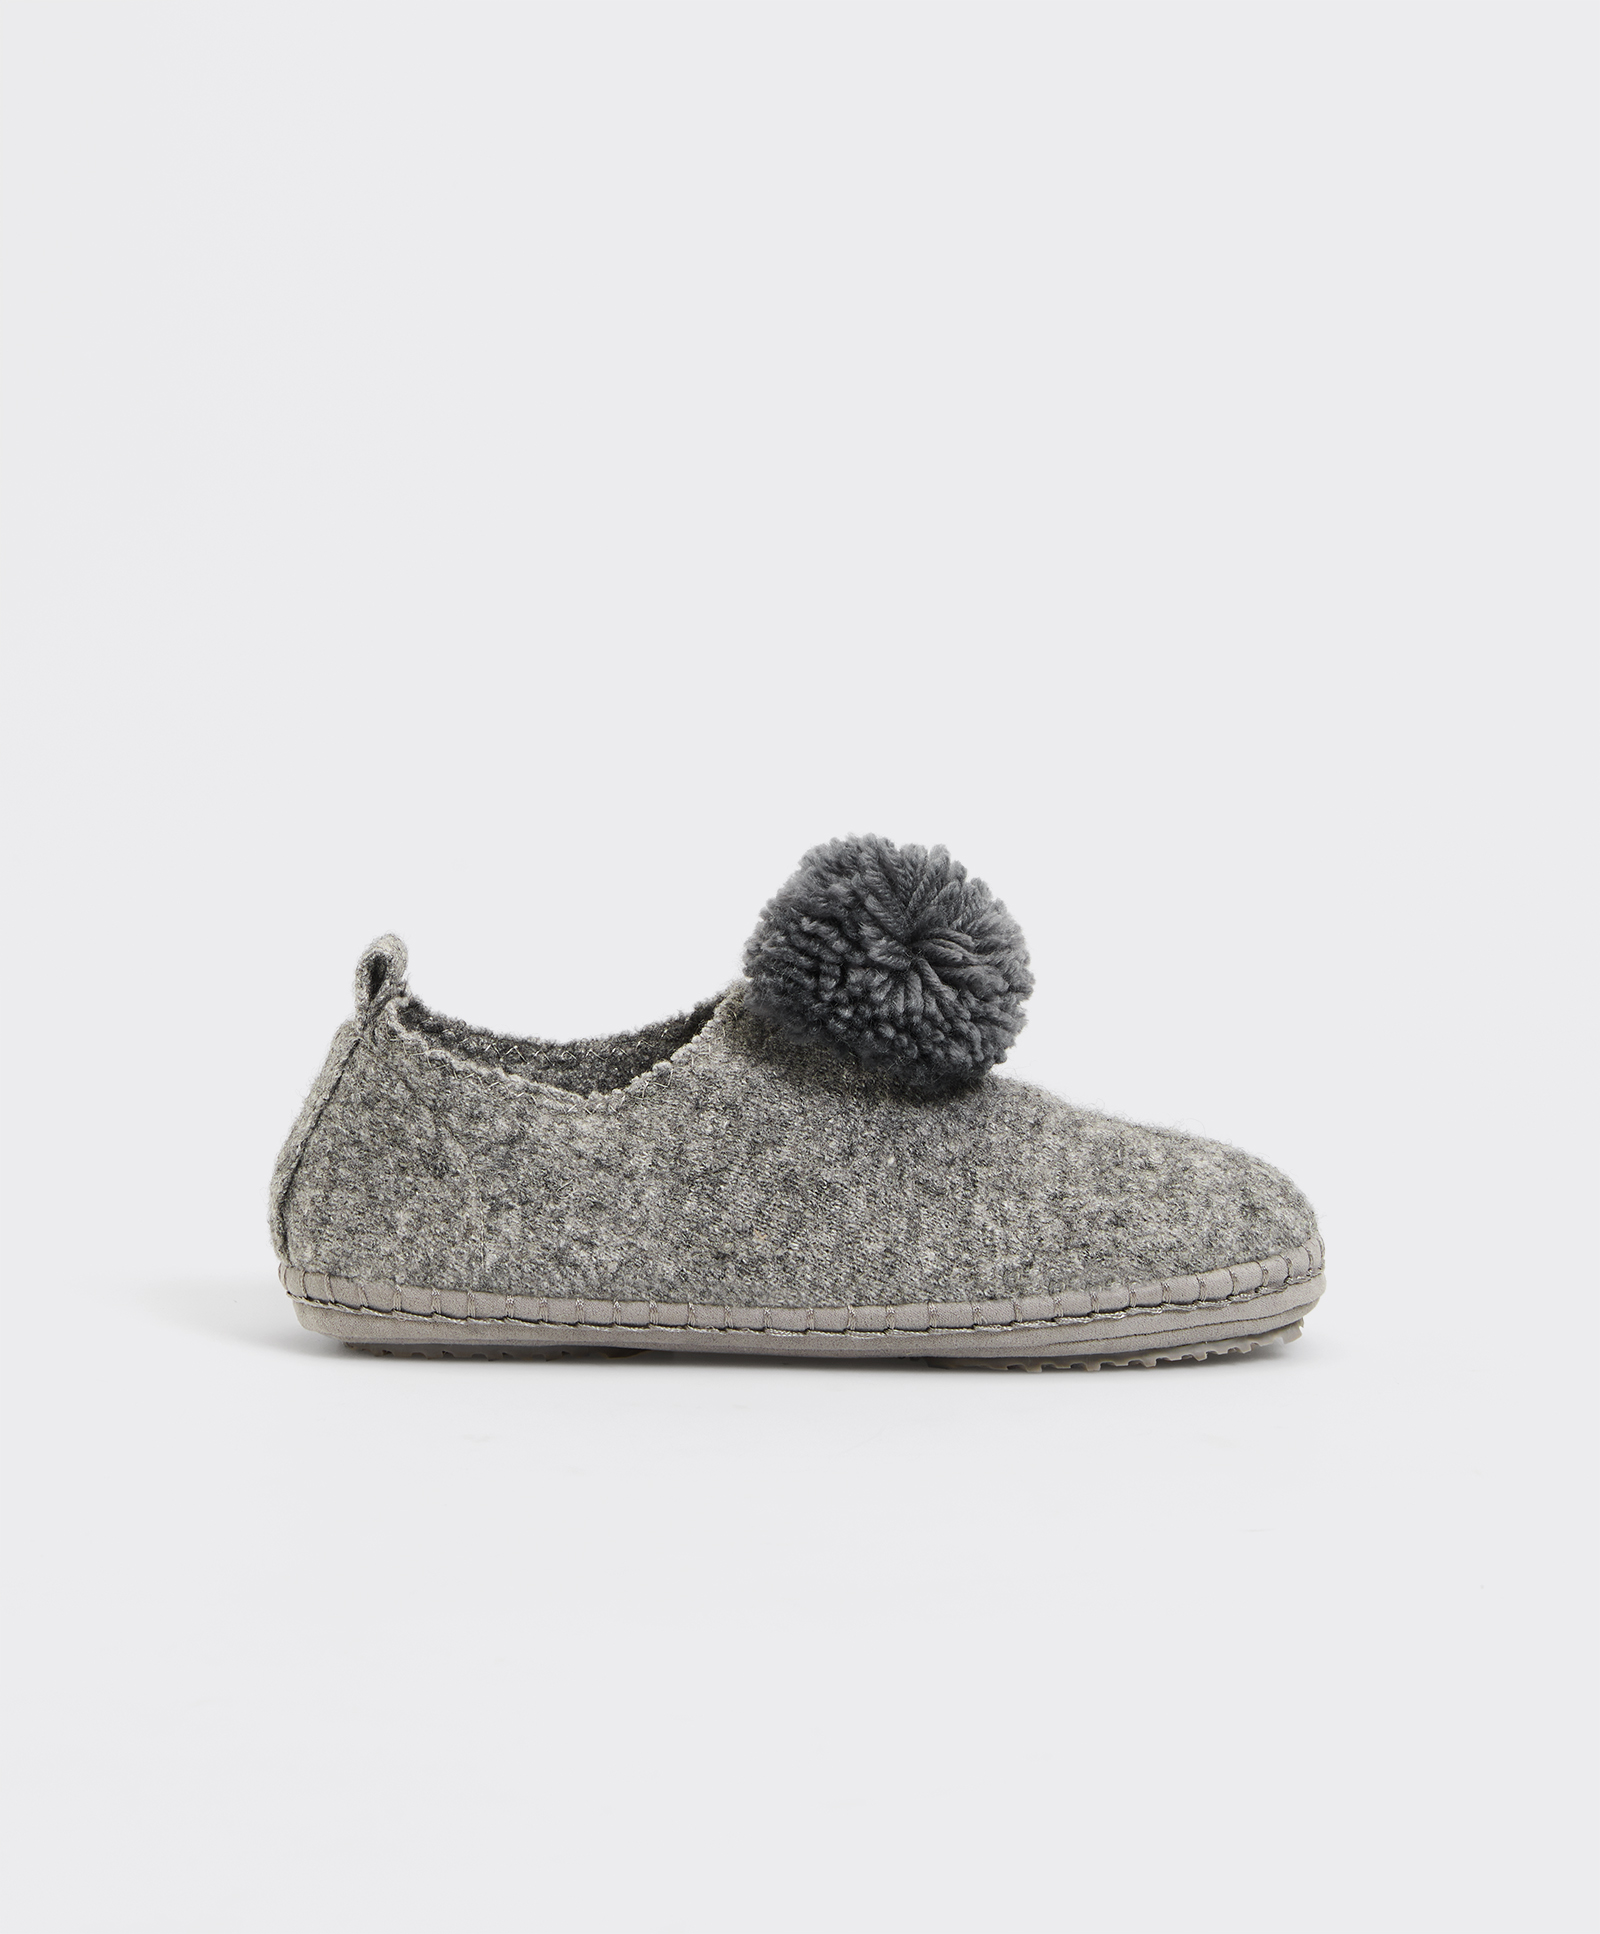 Pompom slippers